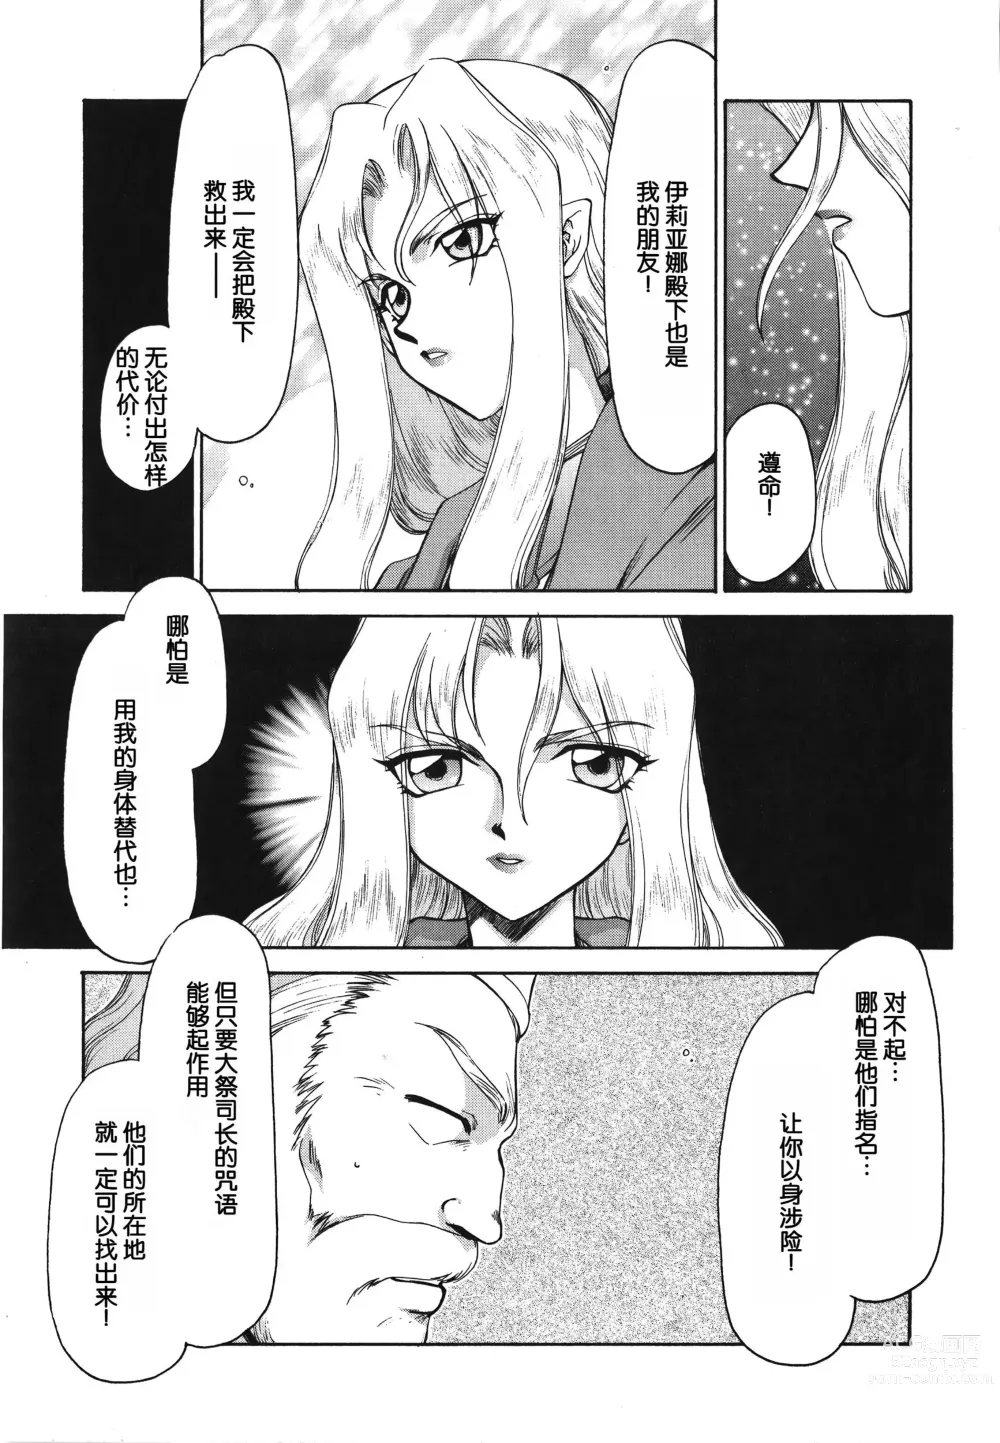 Page 15 of manga Bad Moon...